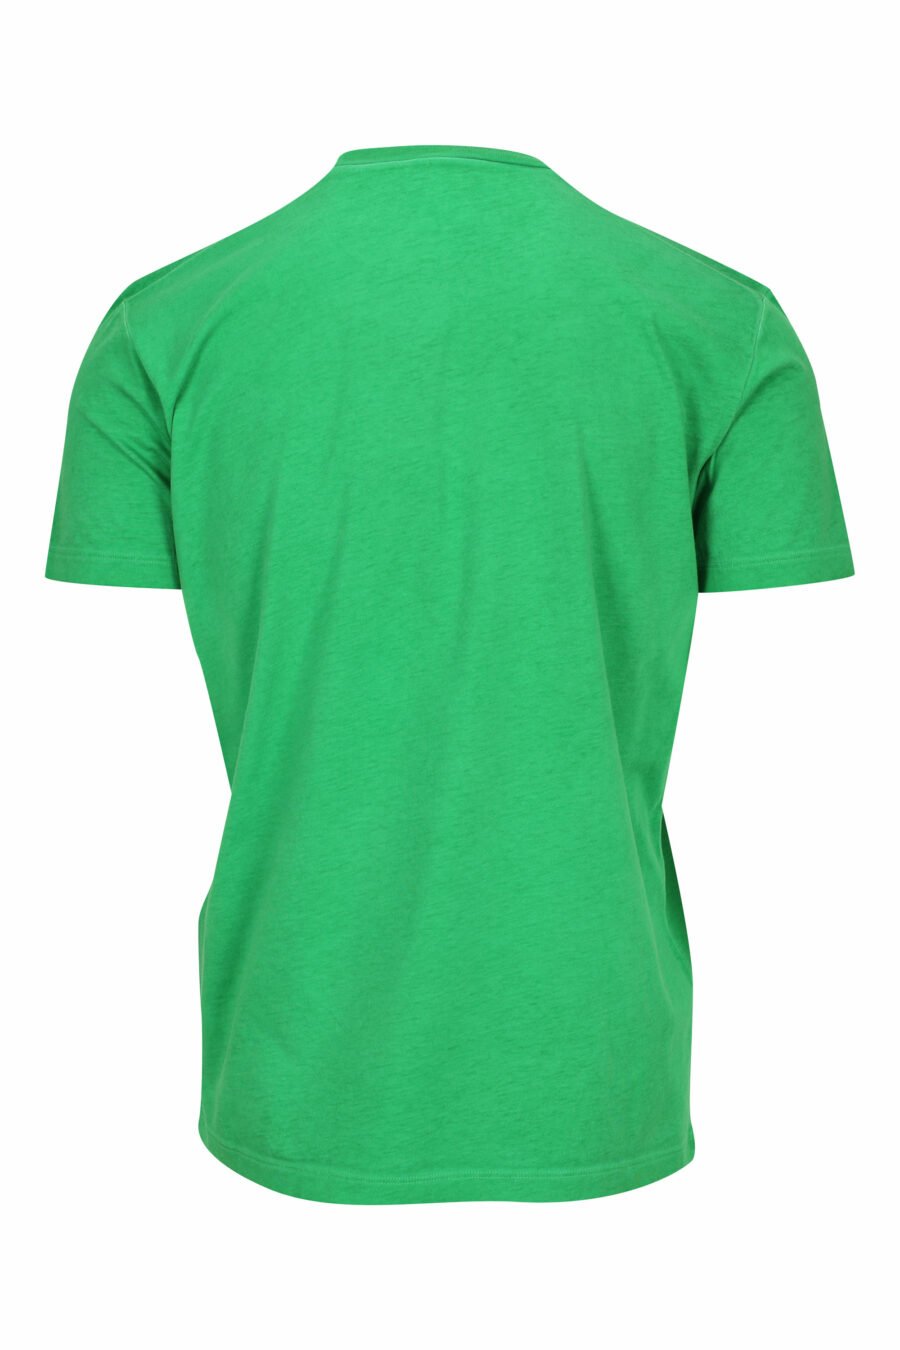 Green T-shirt with maxilogo "top" - 8054148449322 1